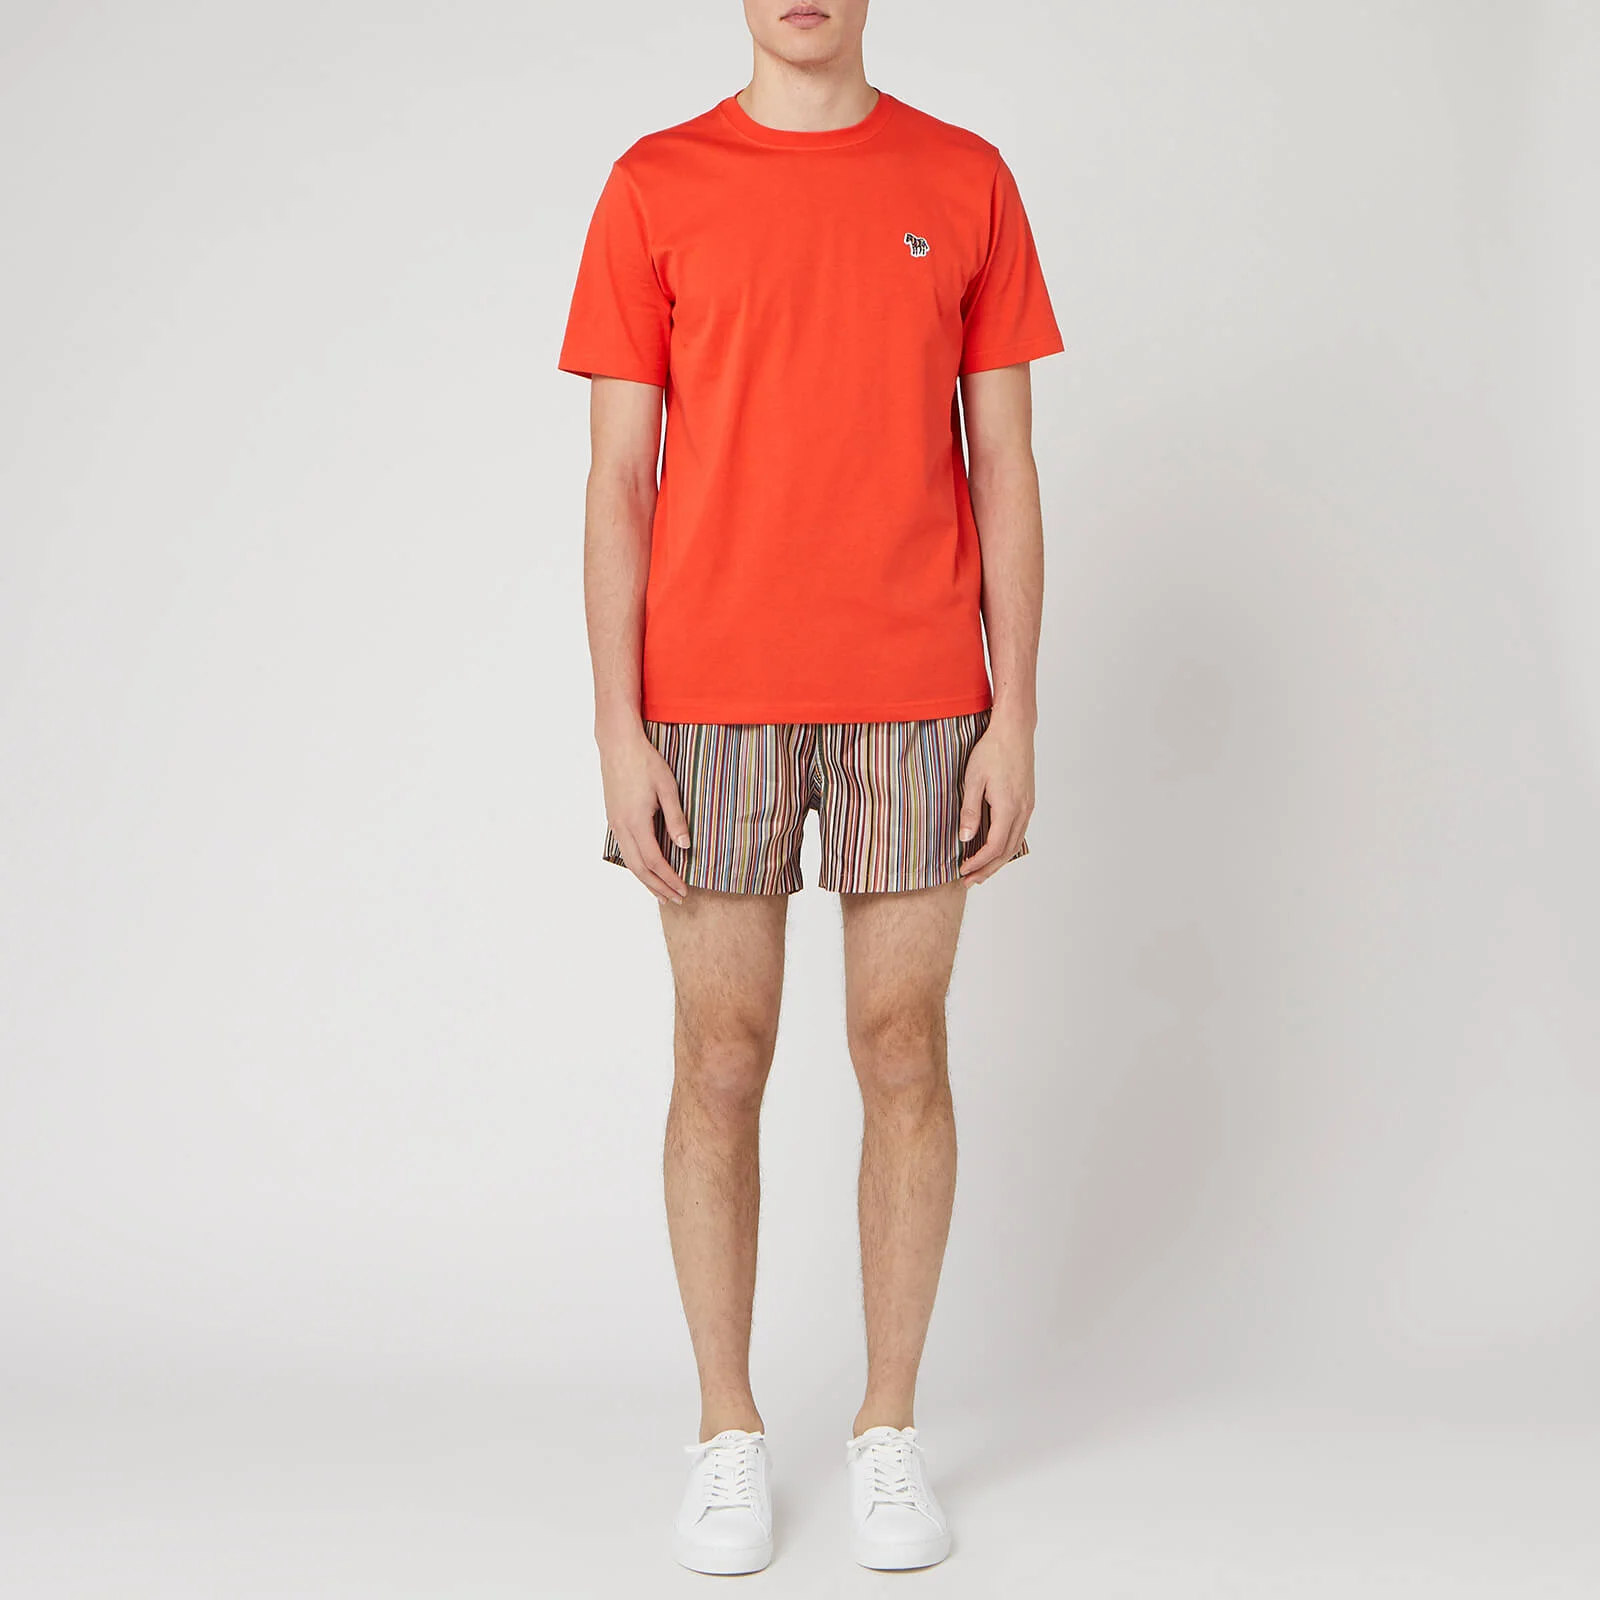 PS Paul Smith Men's Regular Fit Zebra T-Shirt - Orange Image 1